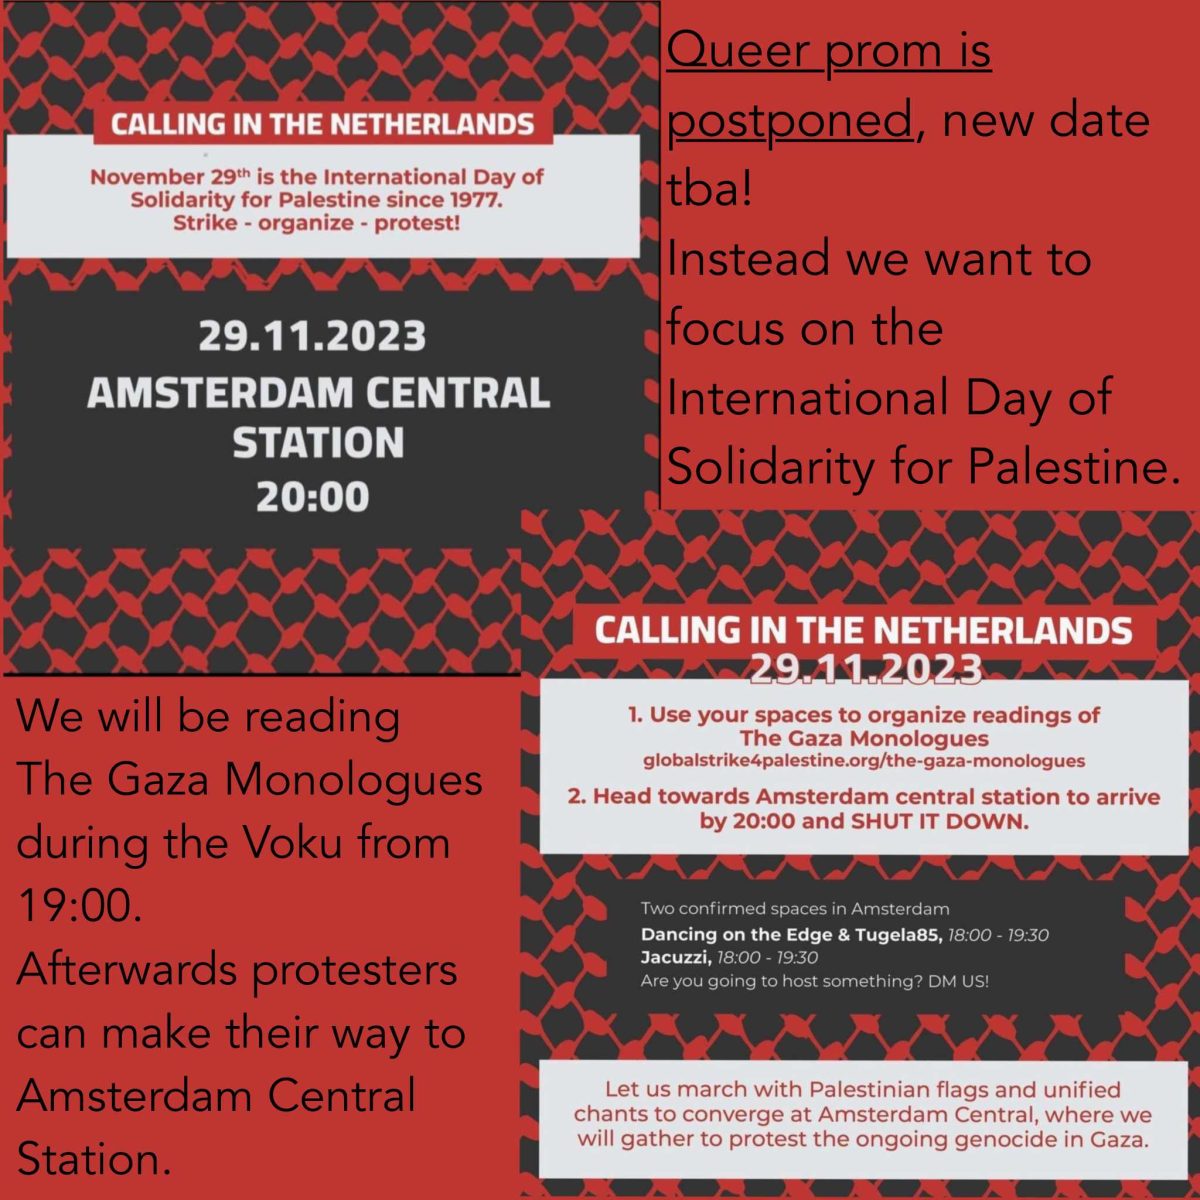 wtf queer wednesdays Queer Prom Postponed!